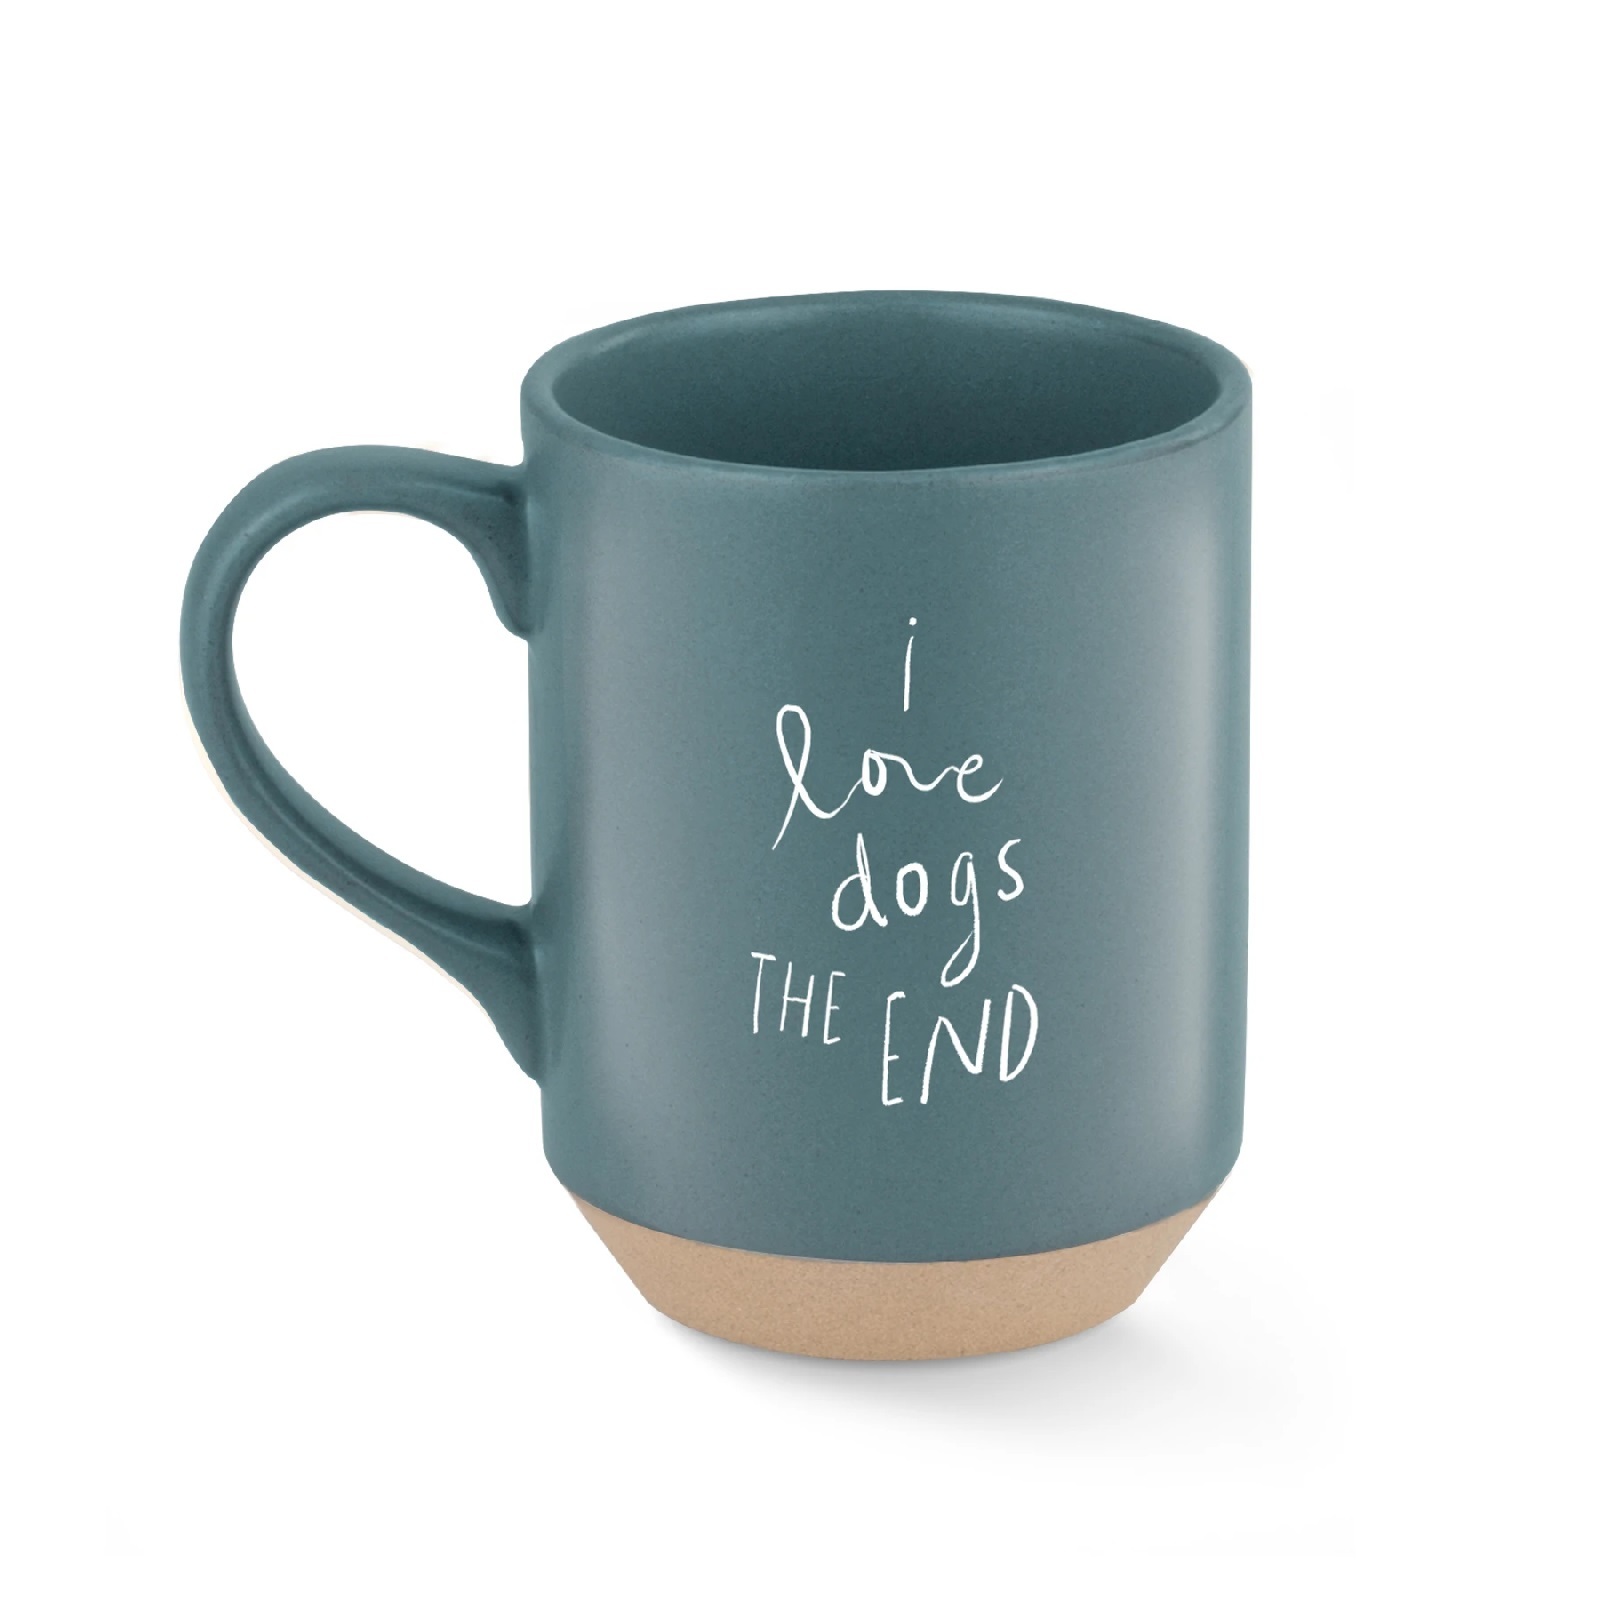 Fringe Studio Stoneware Tea or Coffee Mug - I Love Dogs, The End image 0